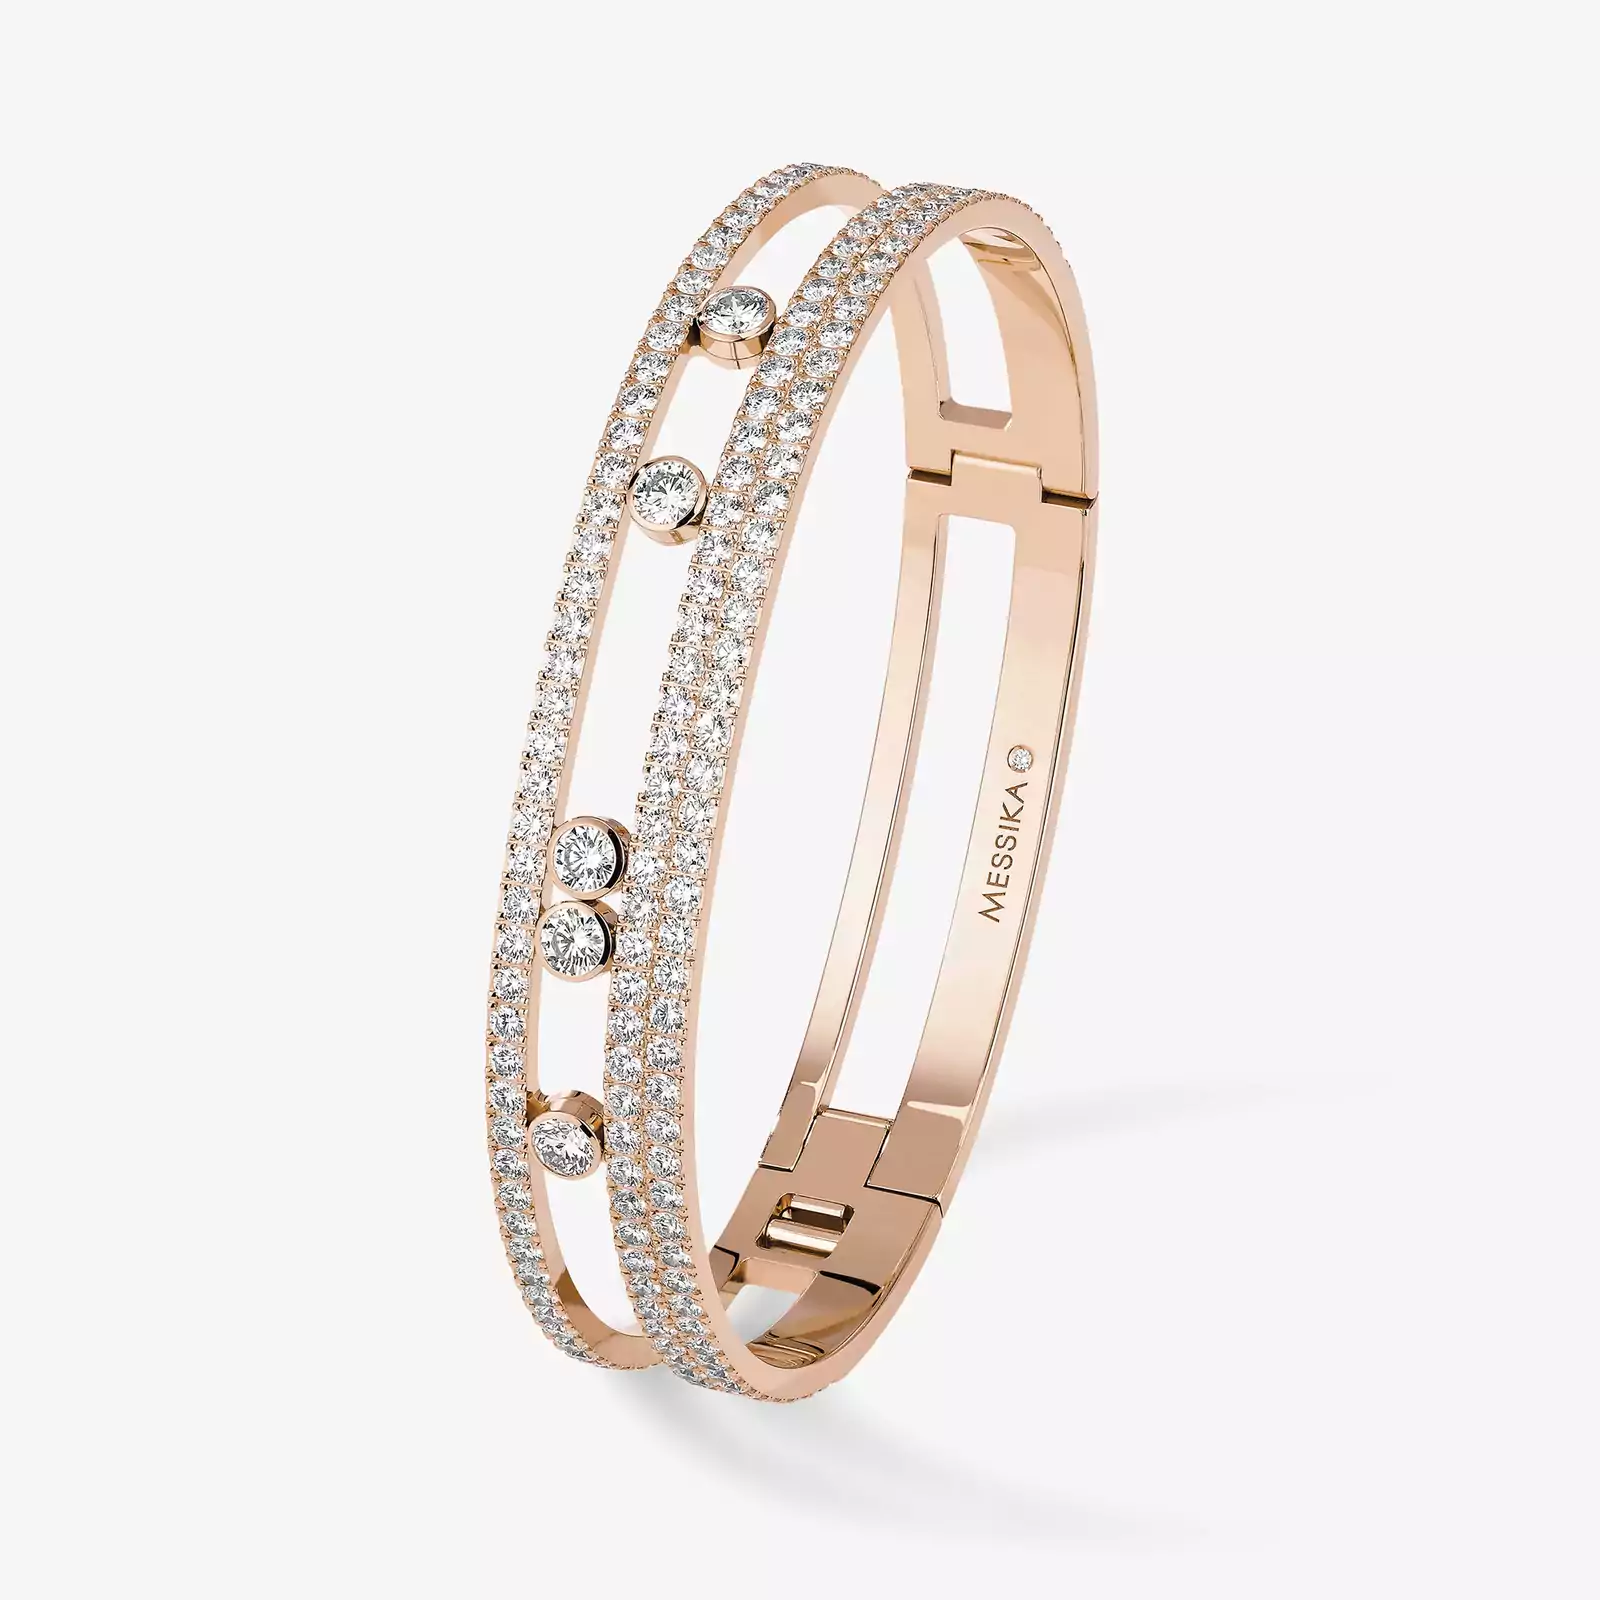 Bracelet For Her Pink Gold Diamond Move Romane Large Pavé Bangle 06733-PG